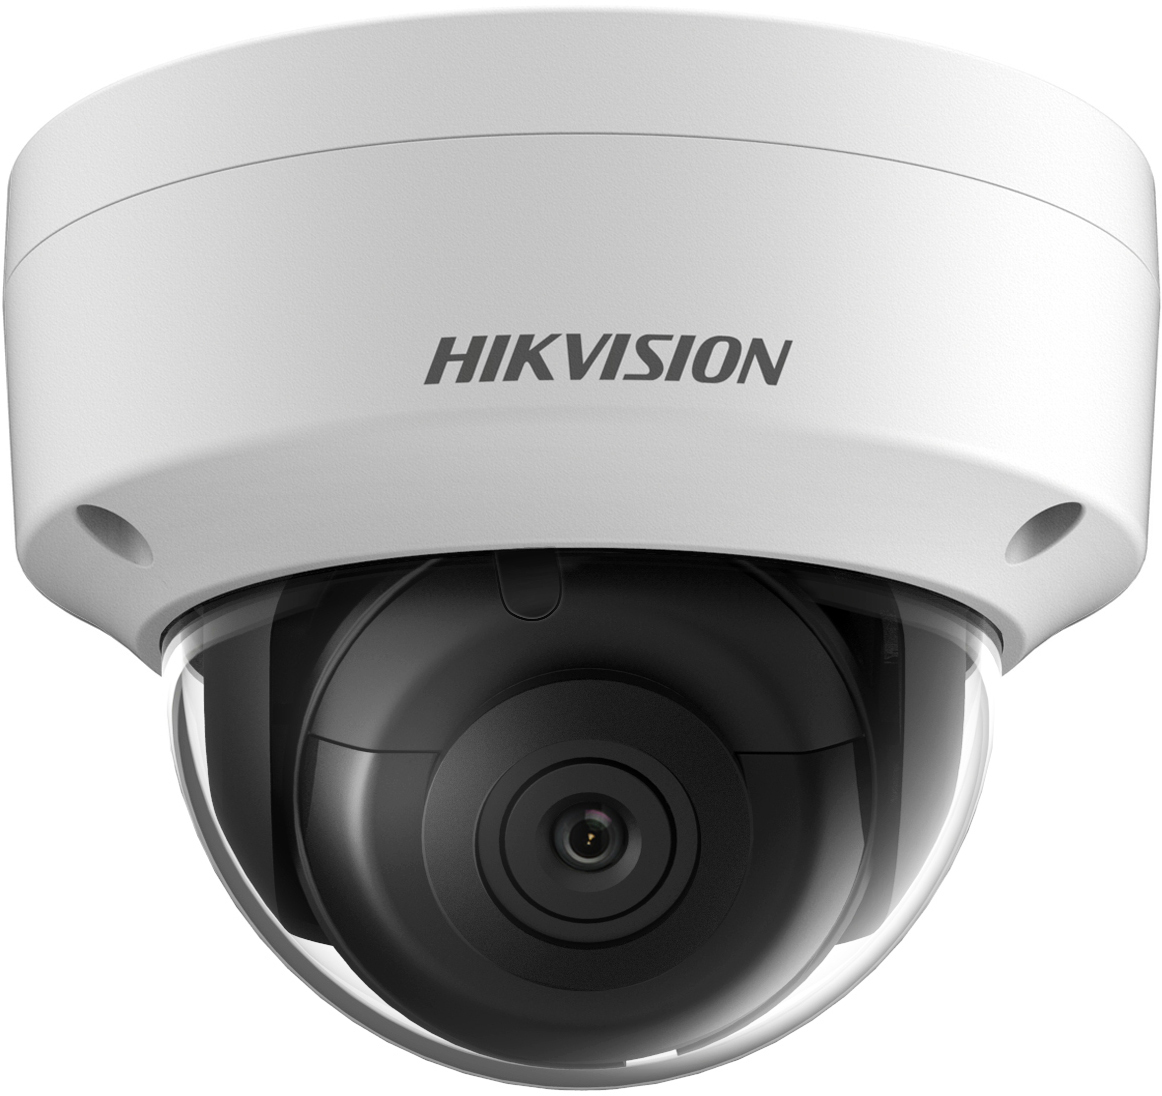 hikvision ip dome camera price